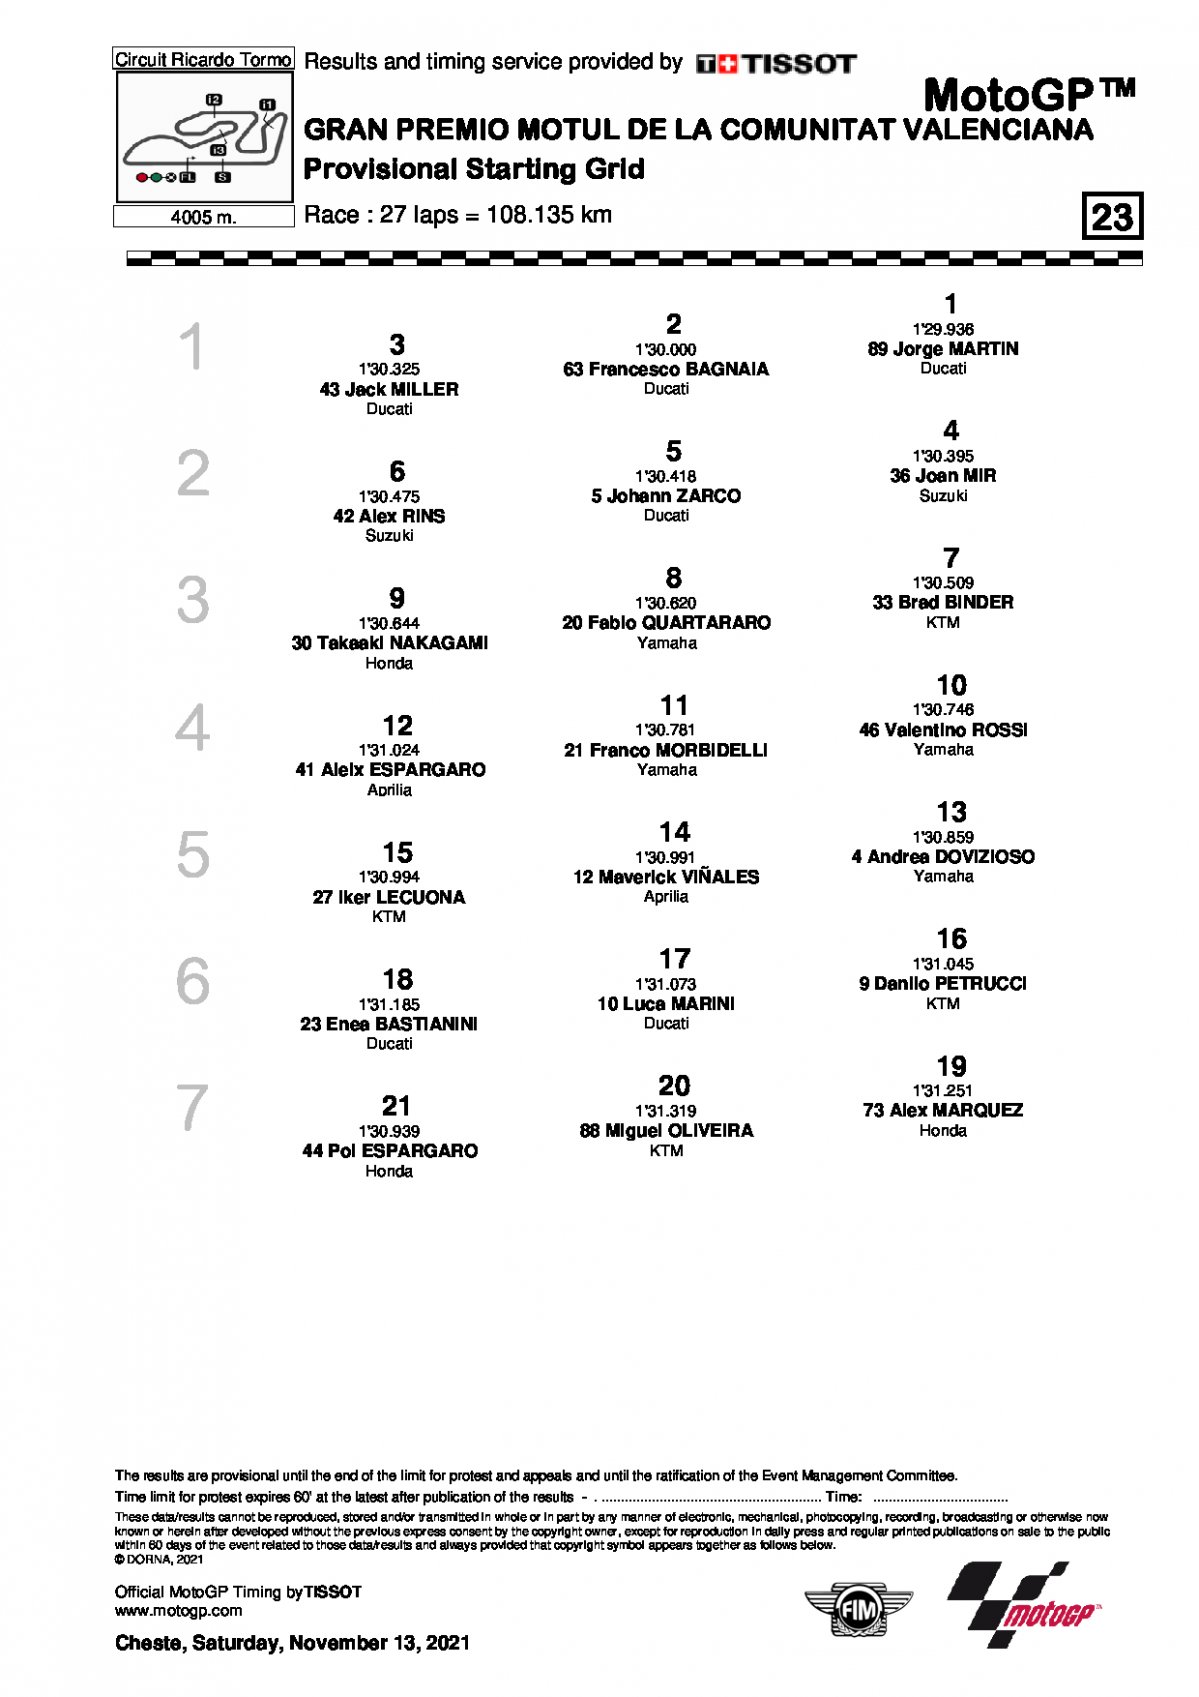 Стартовая решетка Гран-При Валенсии, MotoGP (14/11/2021)